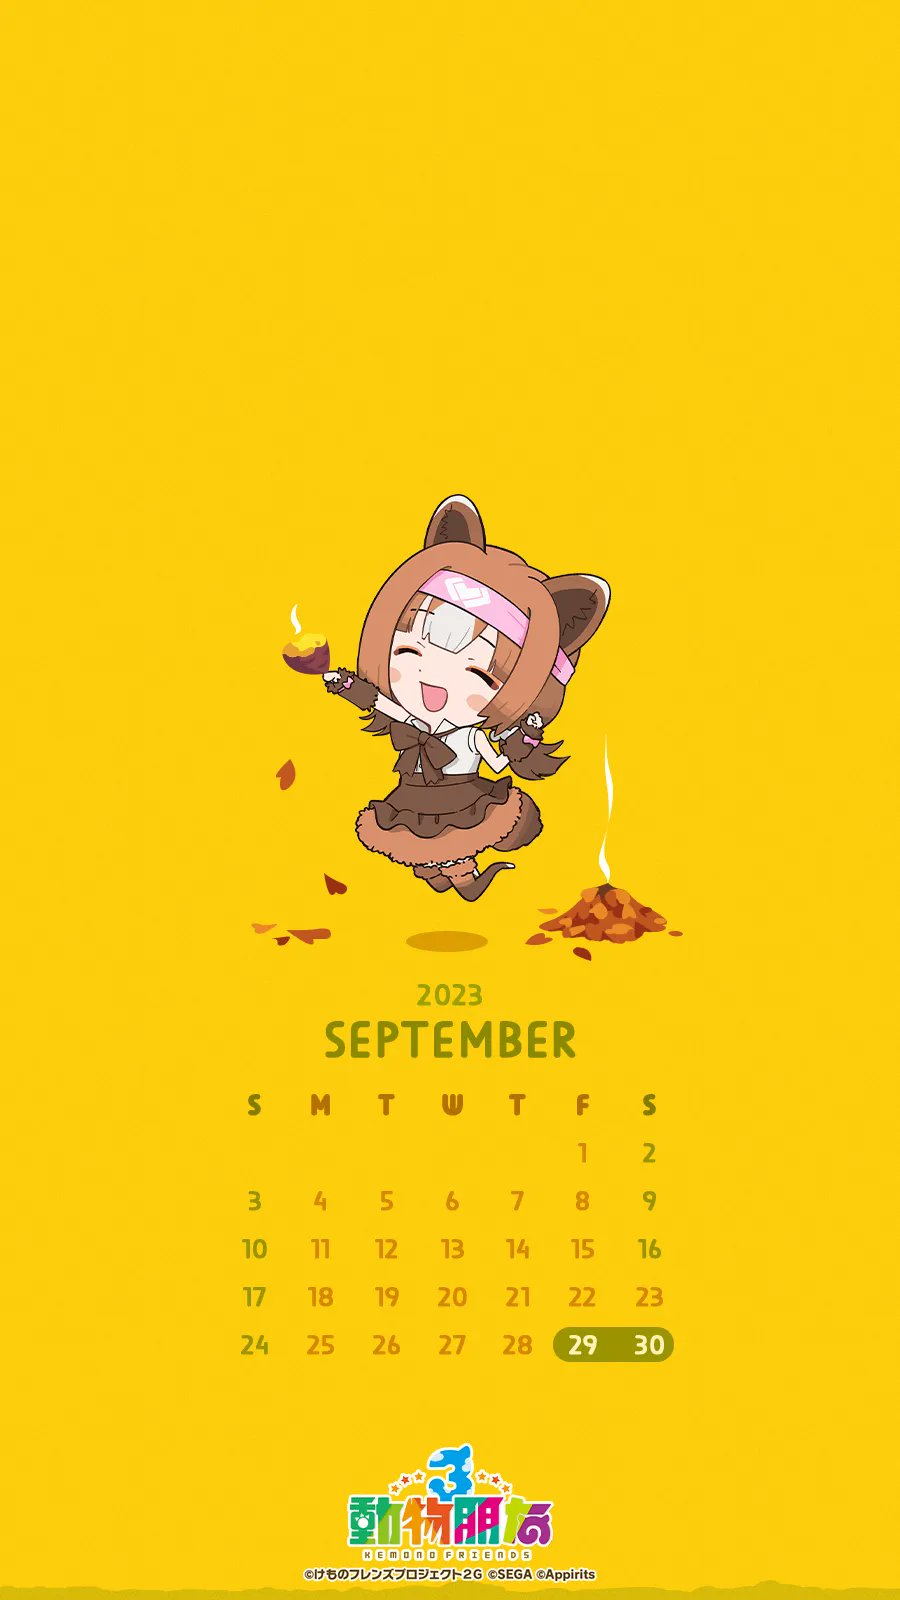 Official Kodiak Bear Chibi art featured in September 2023 calendar posted by KF3 Taiwan Twitter account.